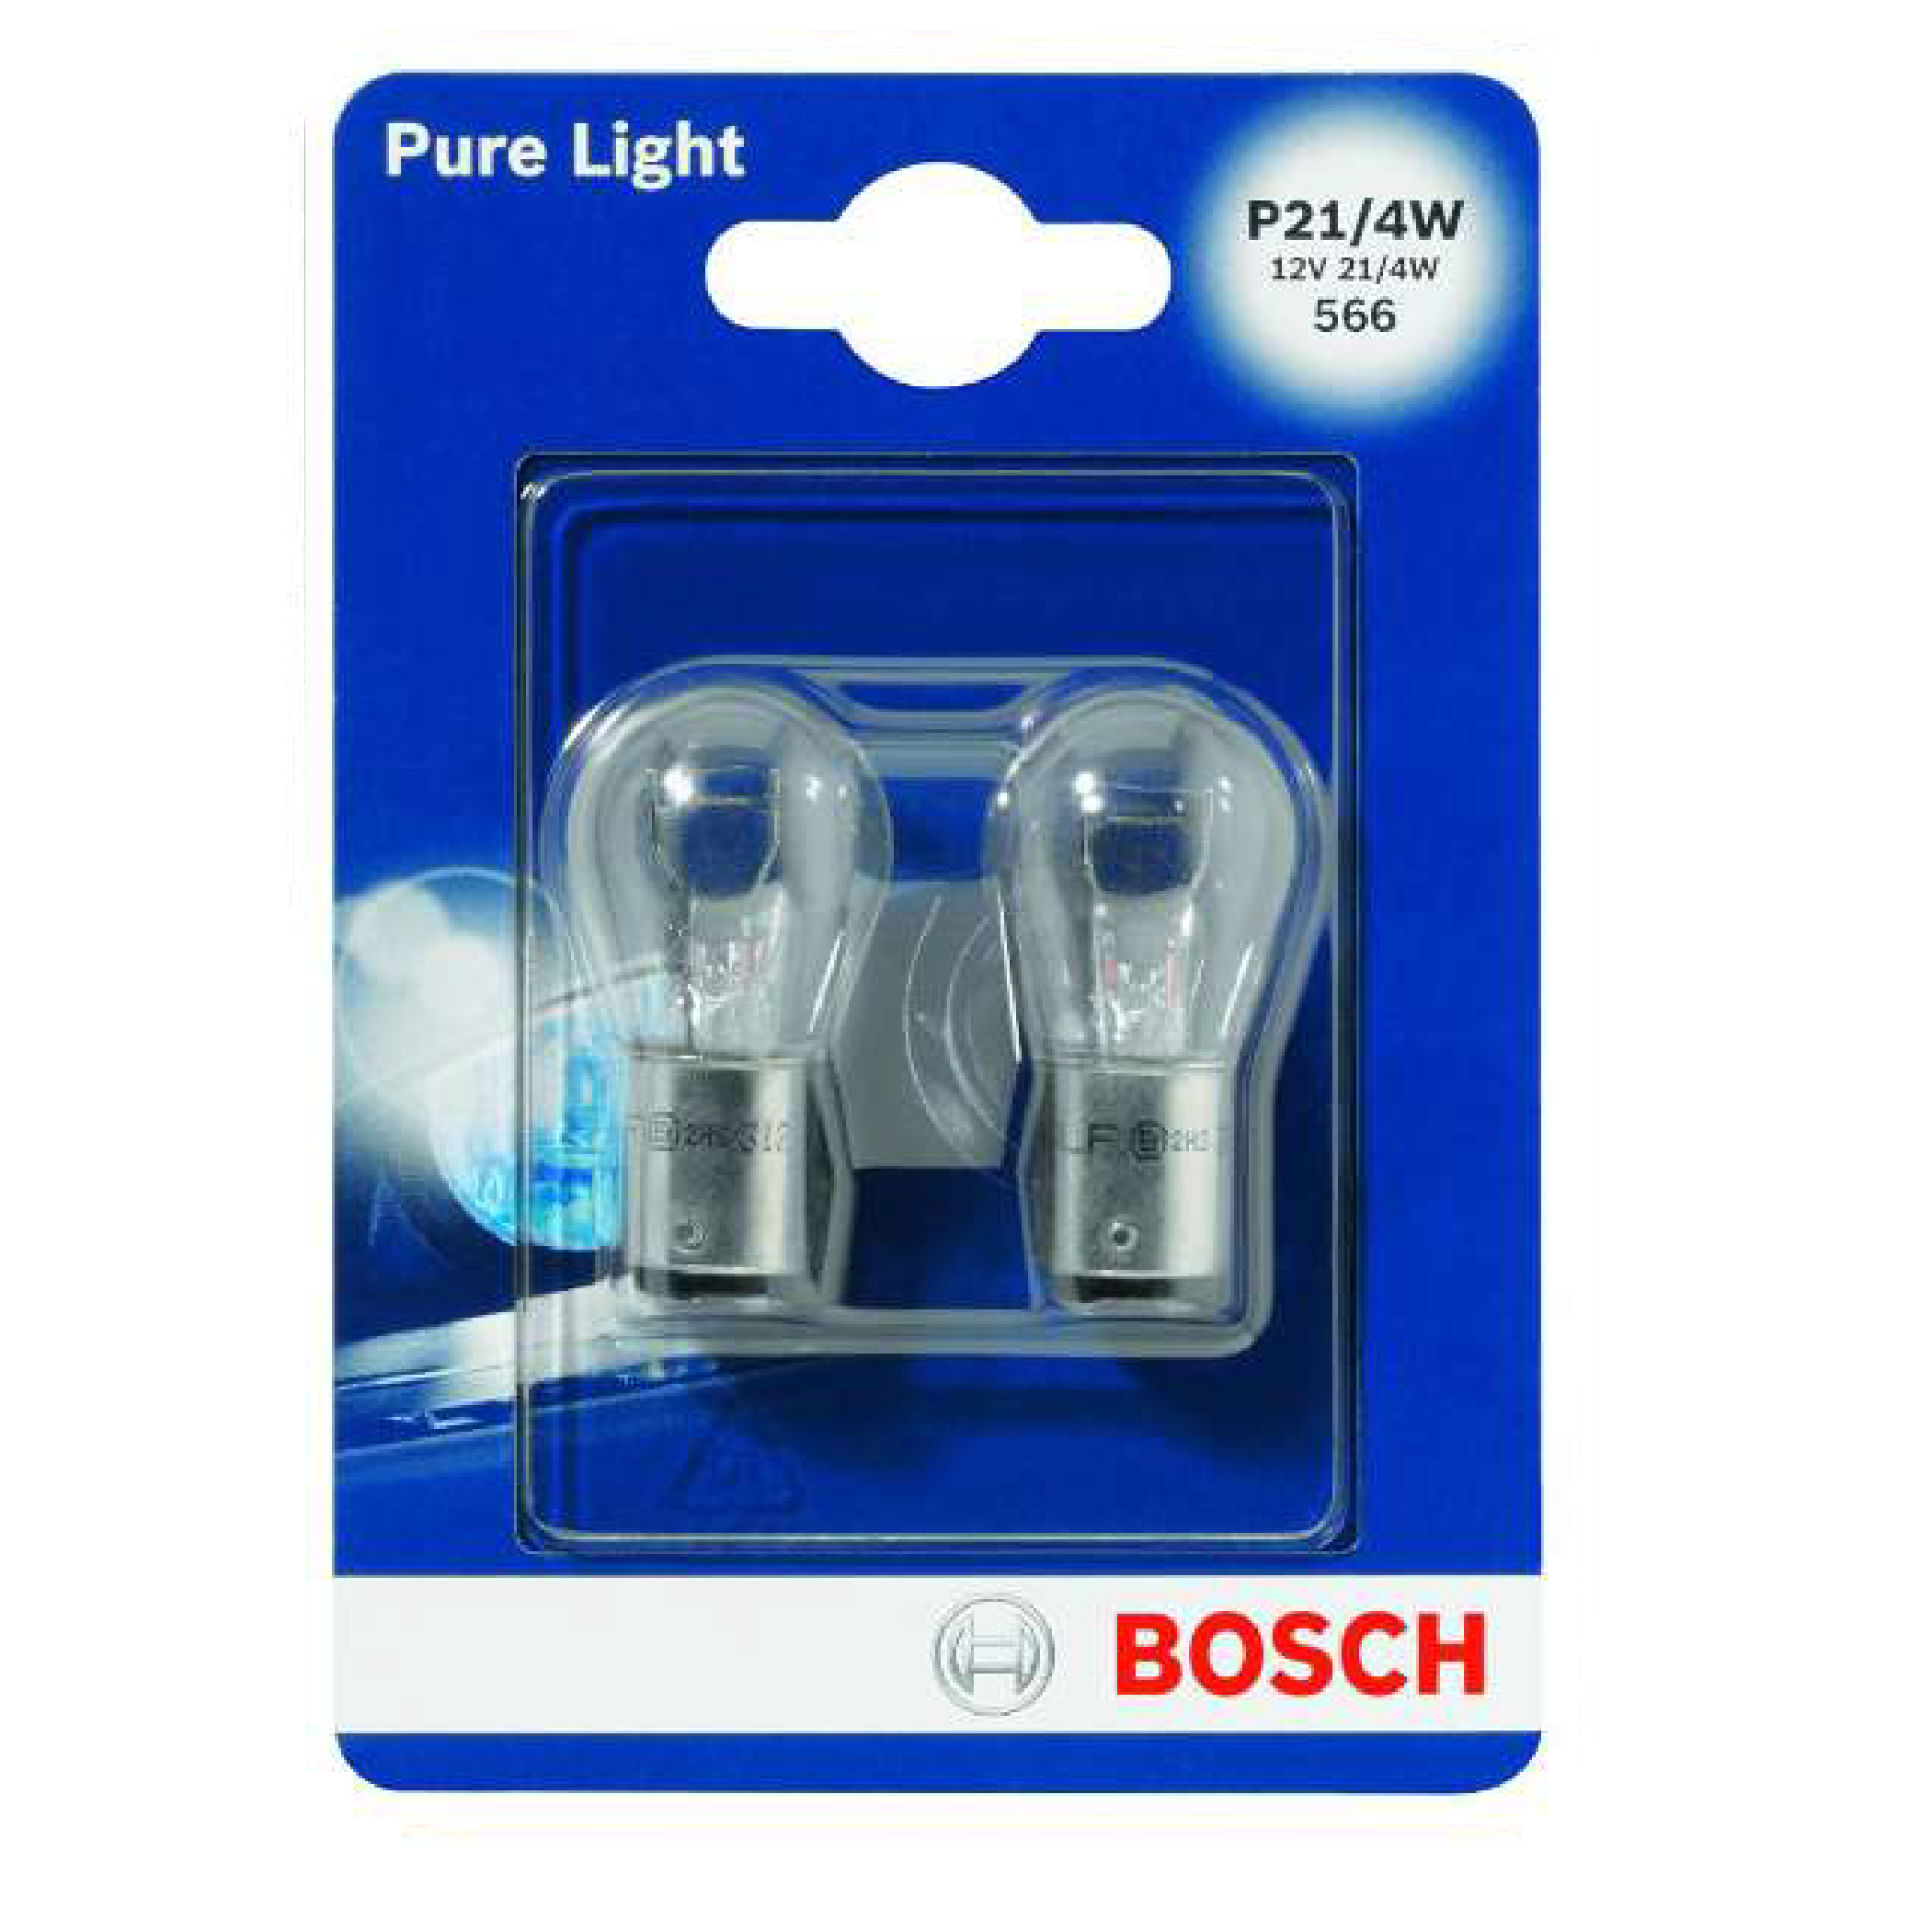 BOSCH 2 LAMP P21/4W 015Bosch